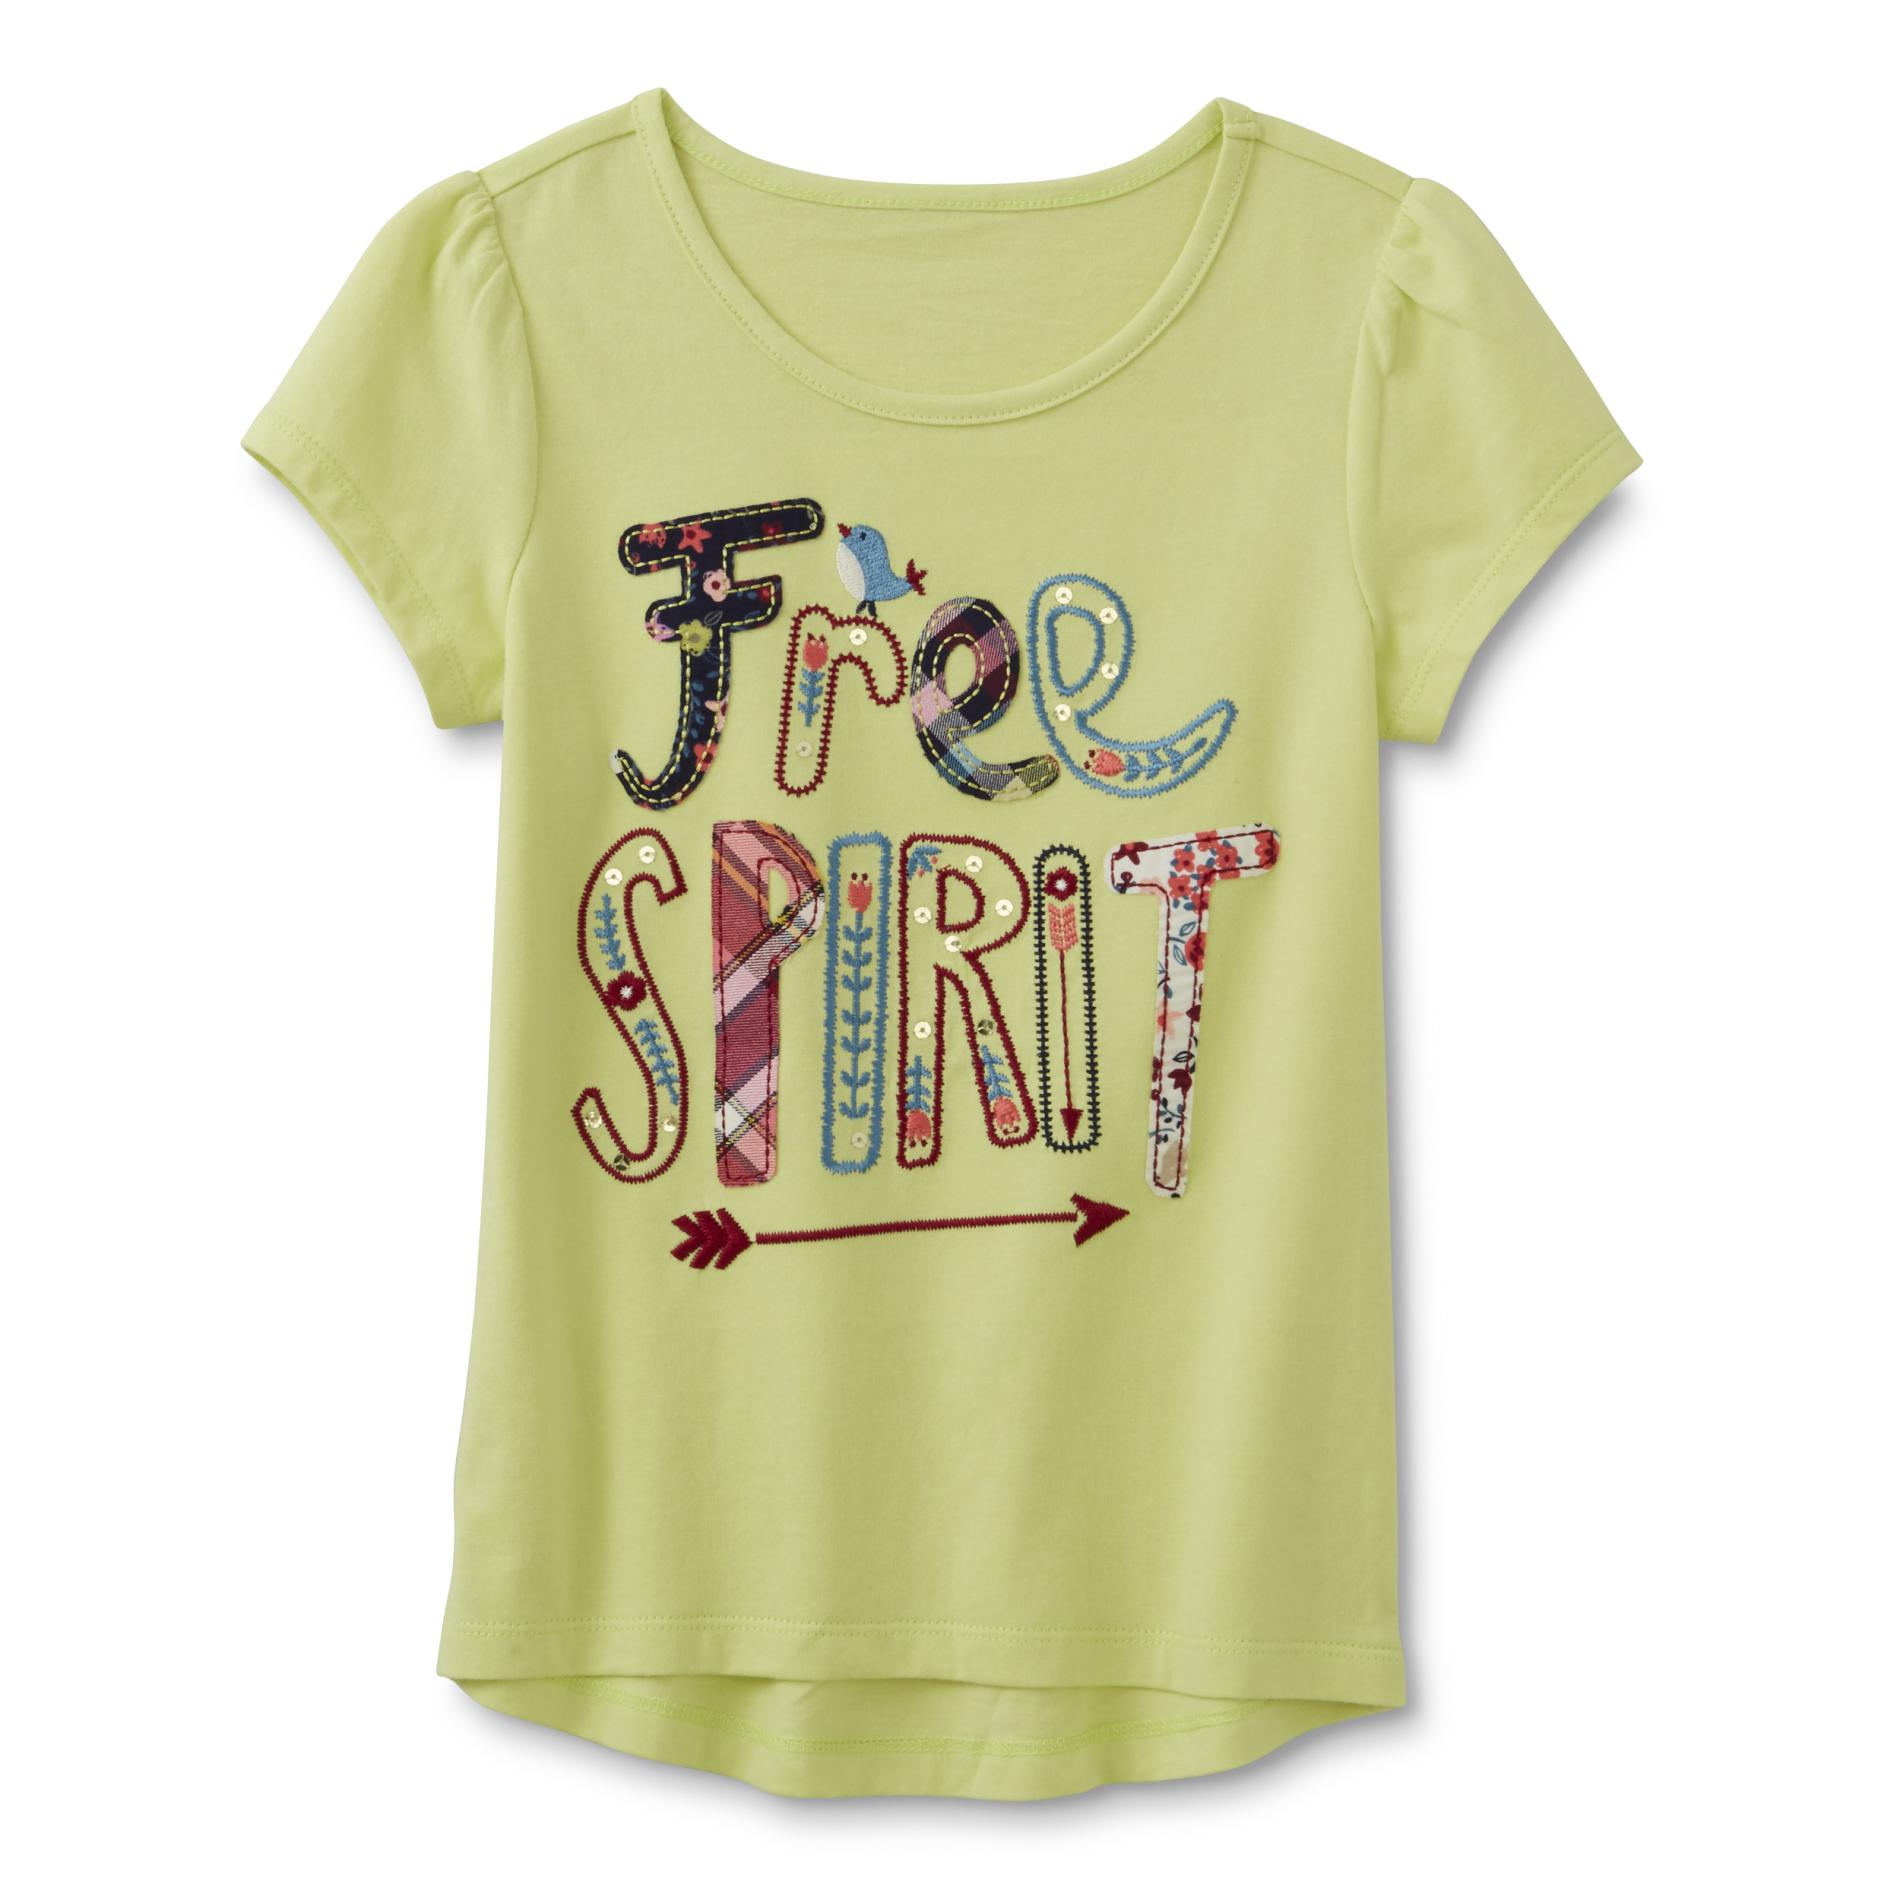 Toughskins Infant & Toddler Girl's Embellished T-Shirt - Free Spirit